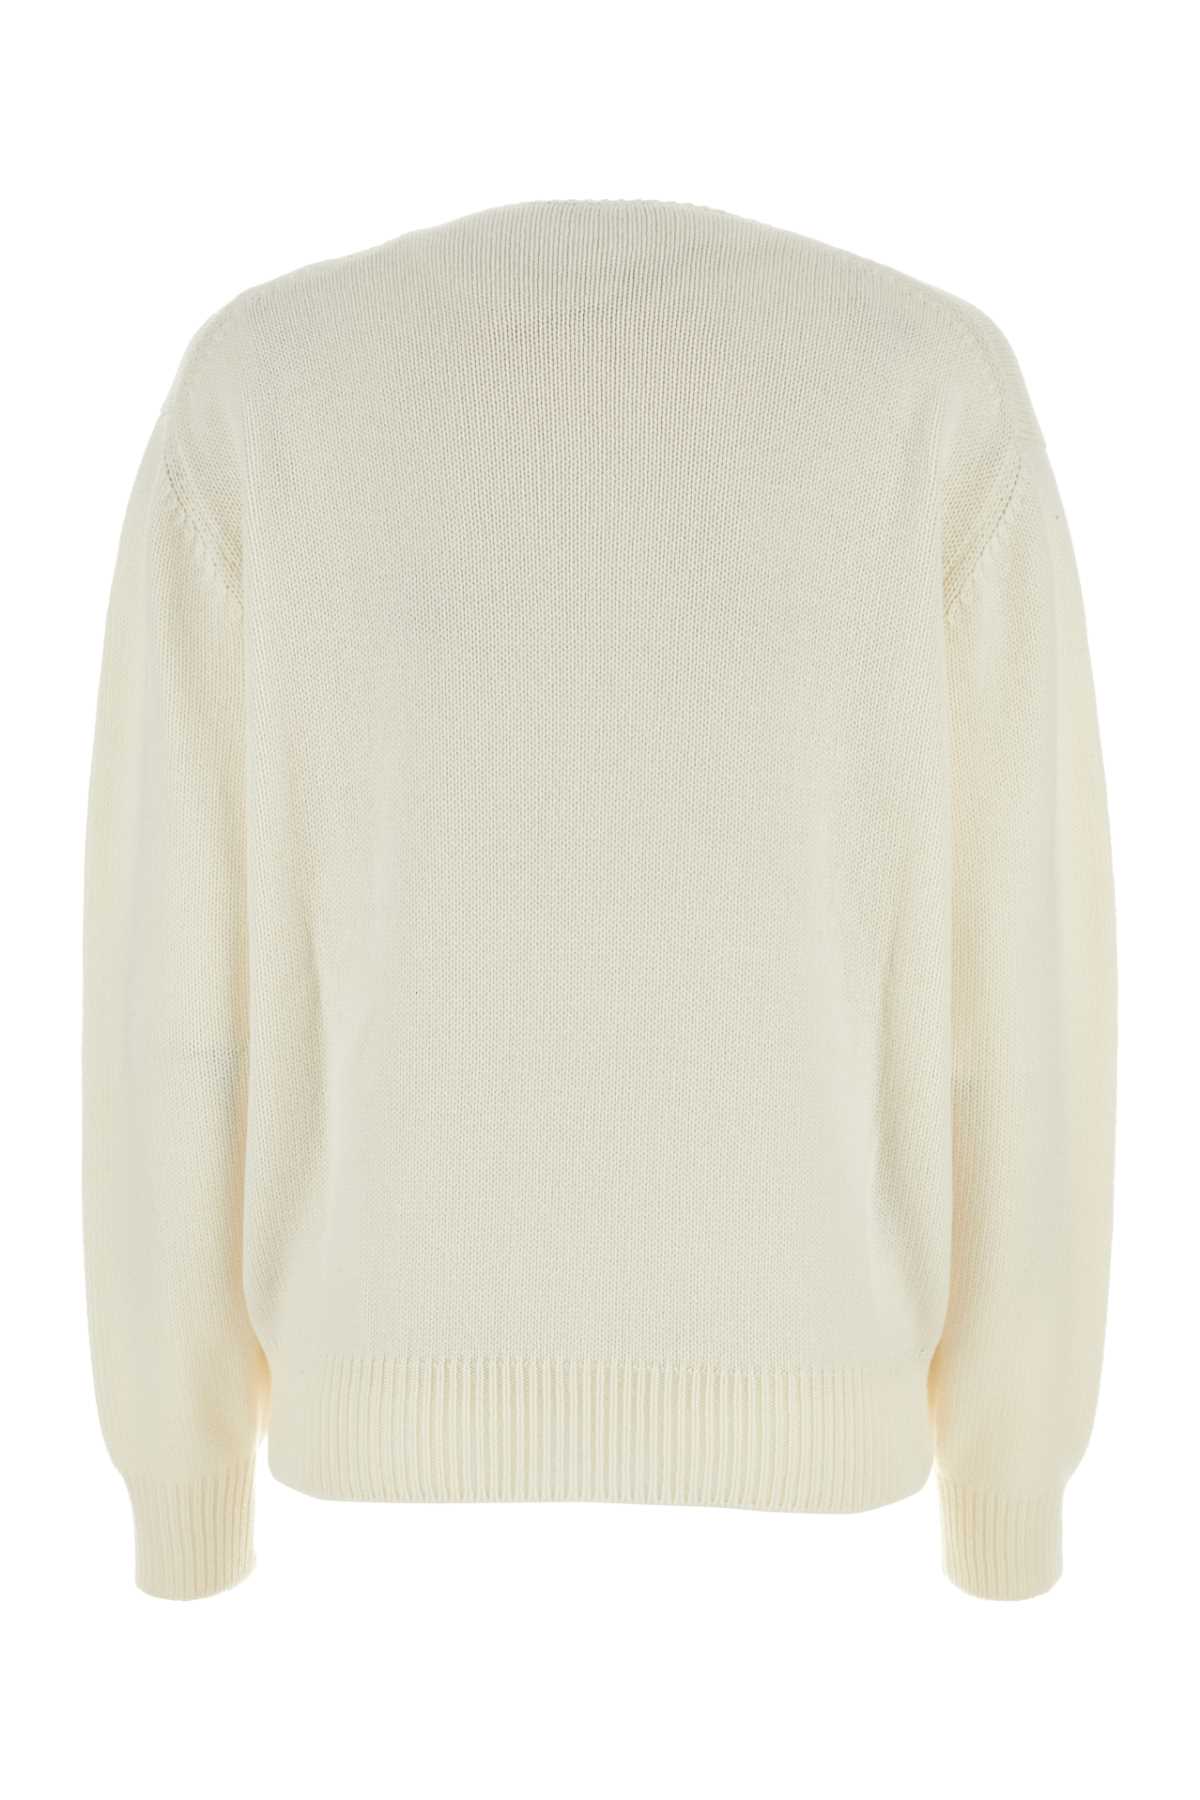 Prada Ivory Cashmere Sweater In Bianco